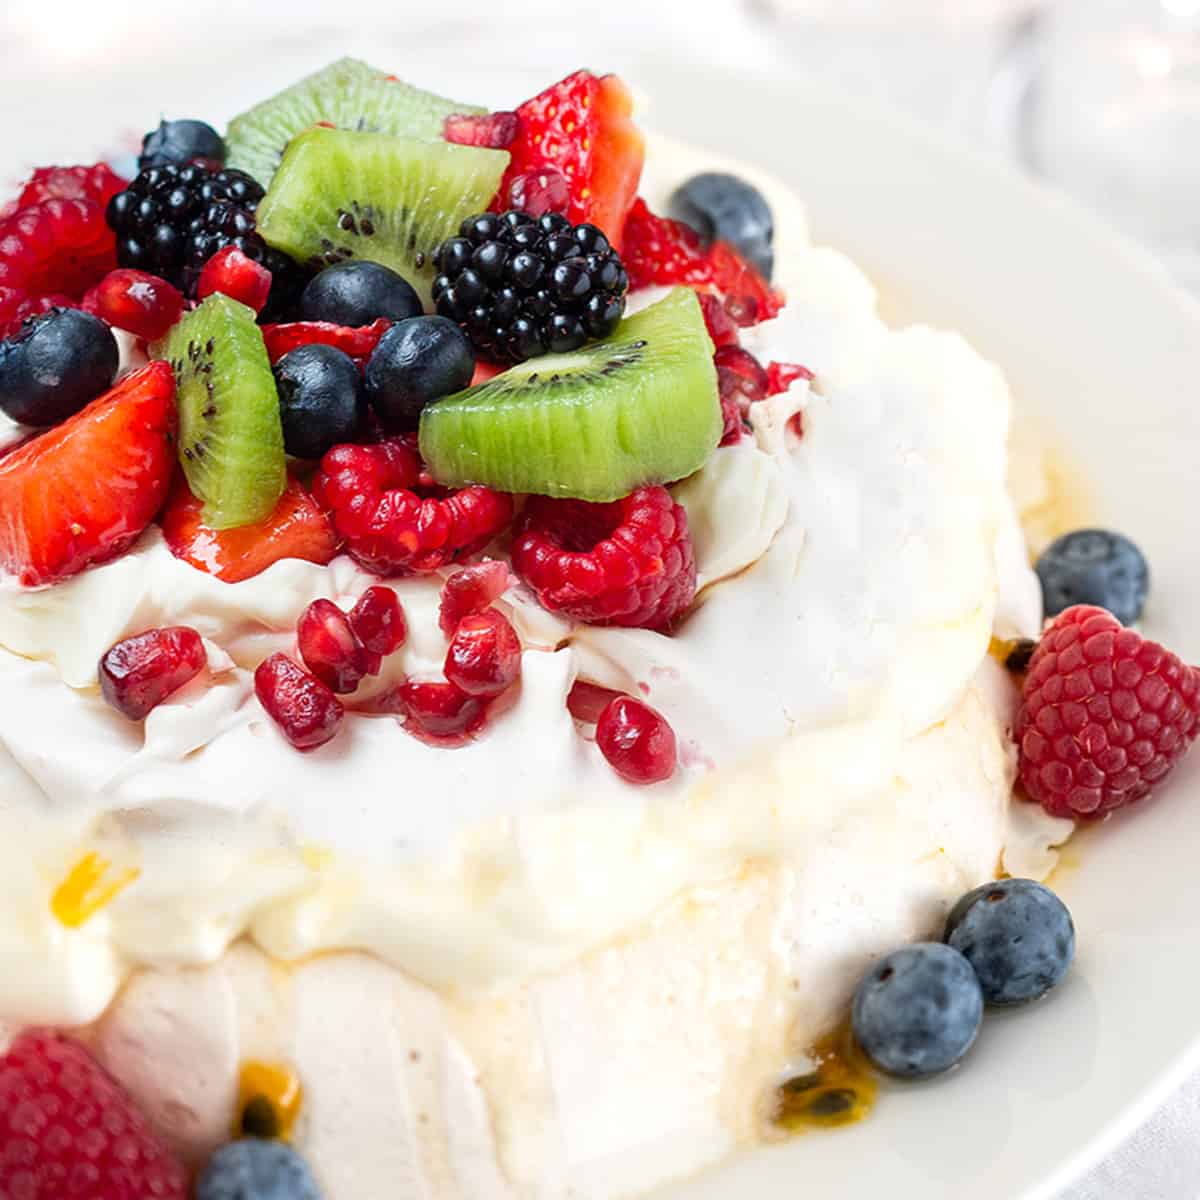 Pavlova - A glorious dessert that tastes as good as it looks!